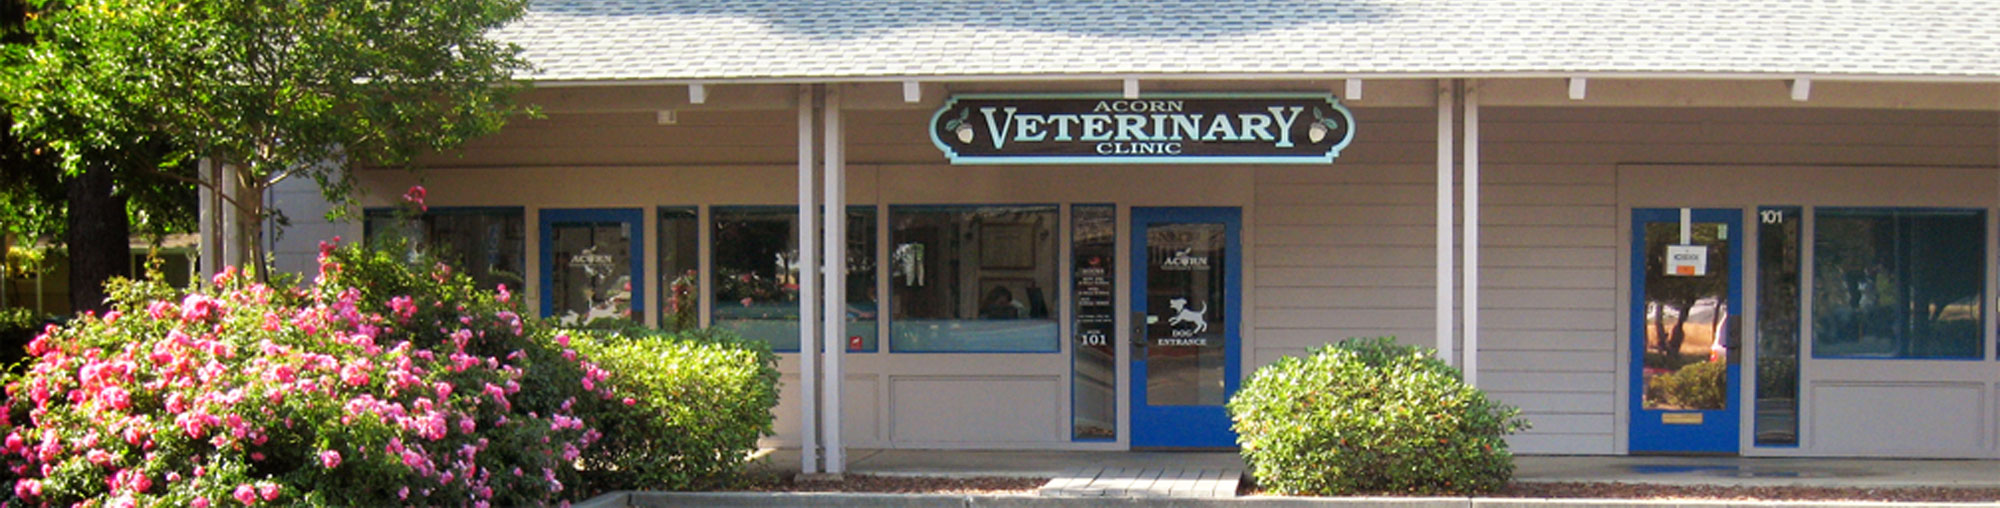 Acorn Veterinary Clinic - Veterinarian serving Davis, Winters, Dixon, and  Woodland